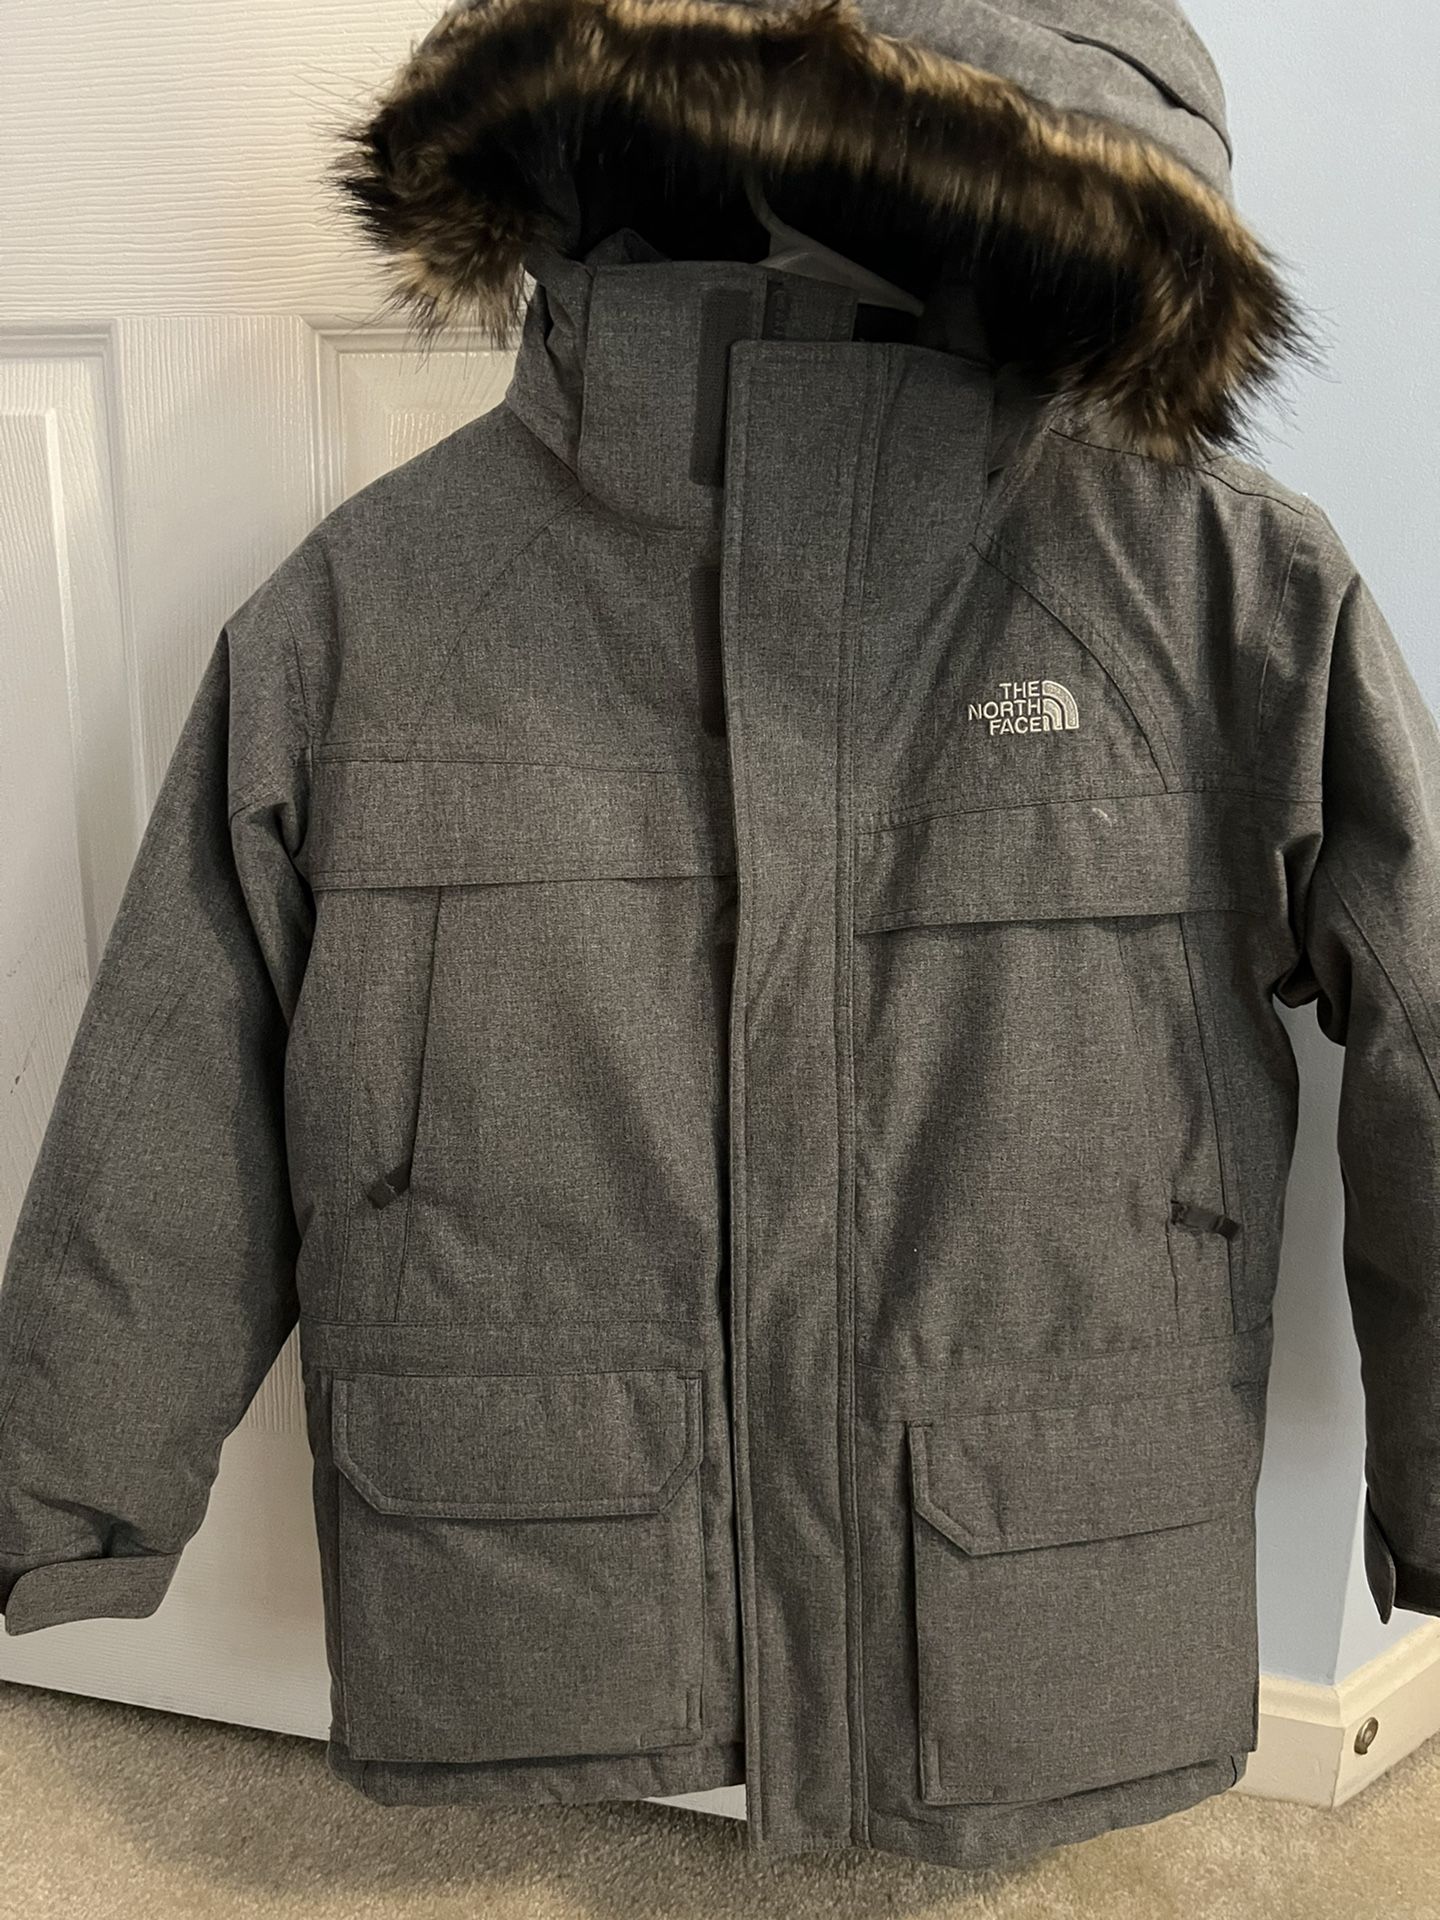 North Face Parka Winter Jacket For Kids